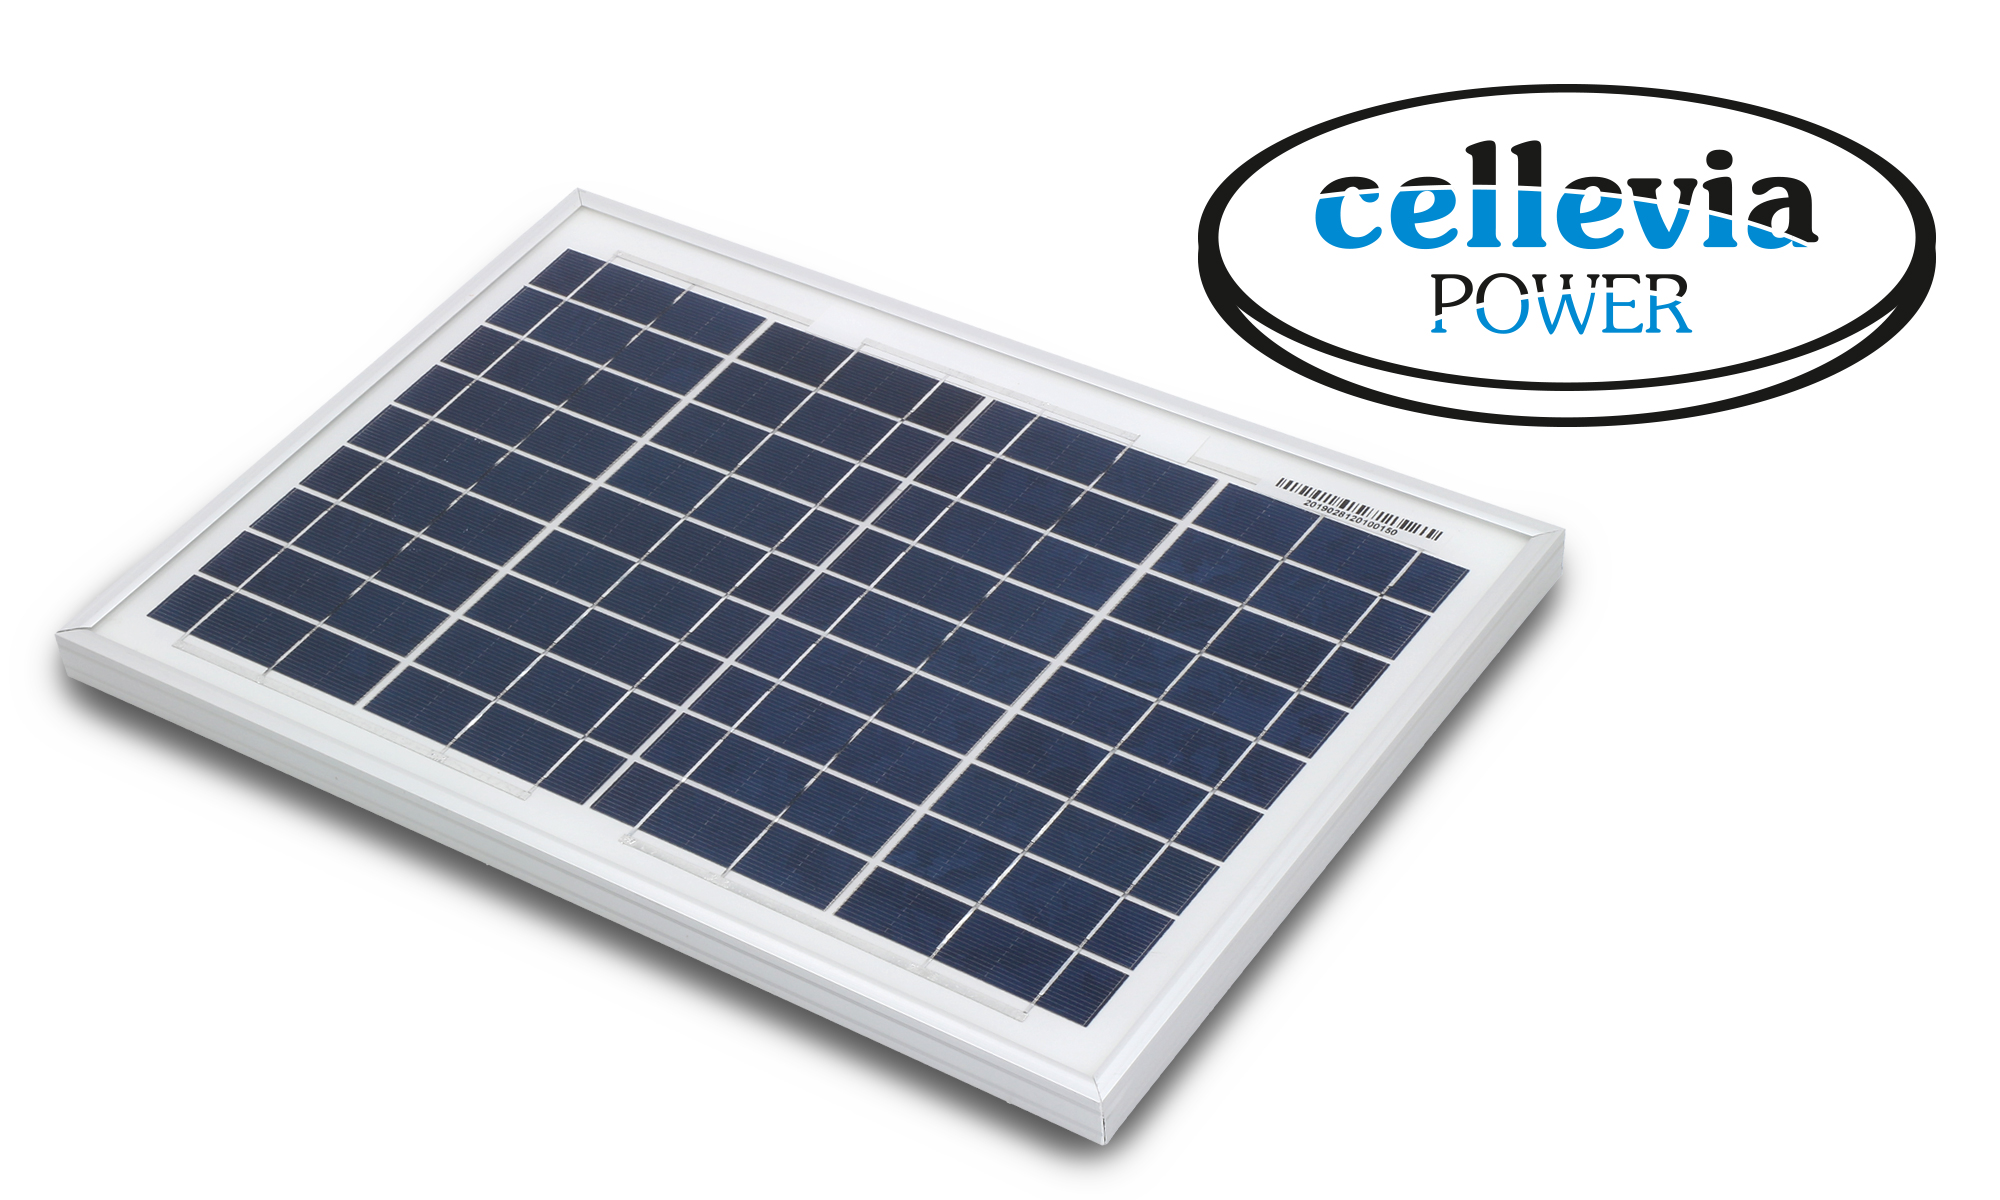 CL-SM10P Cellevia Power photovoltaic panel